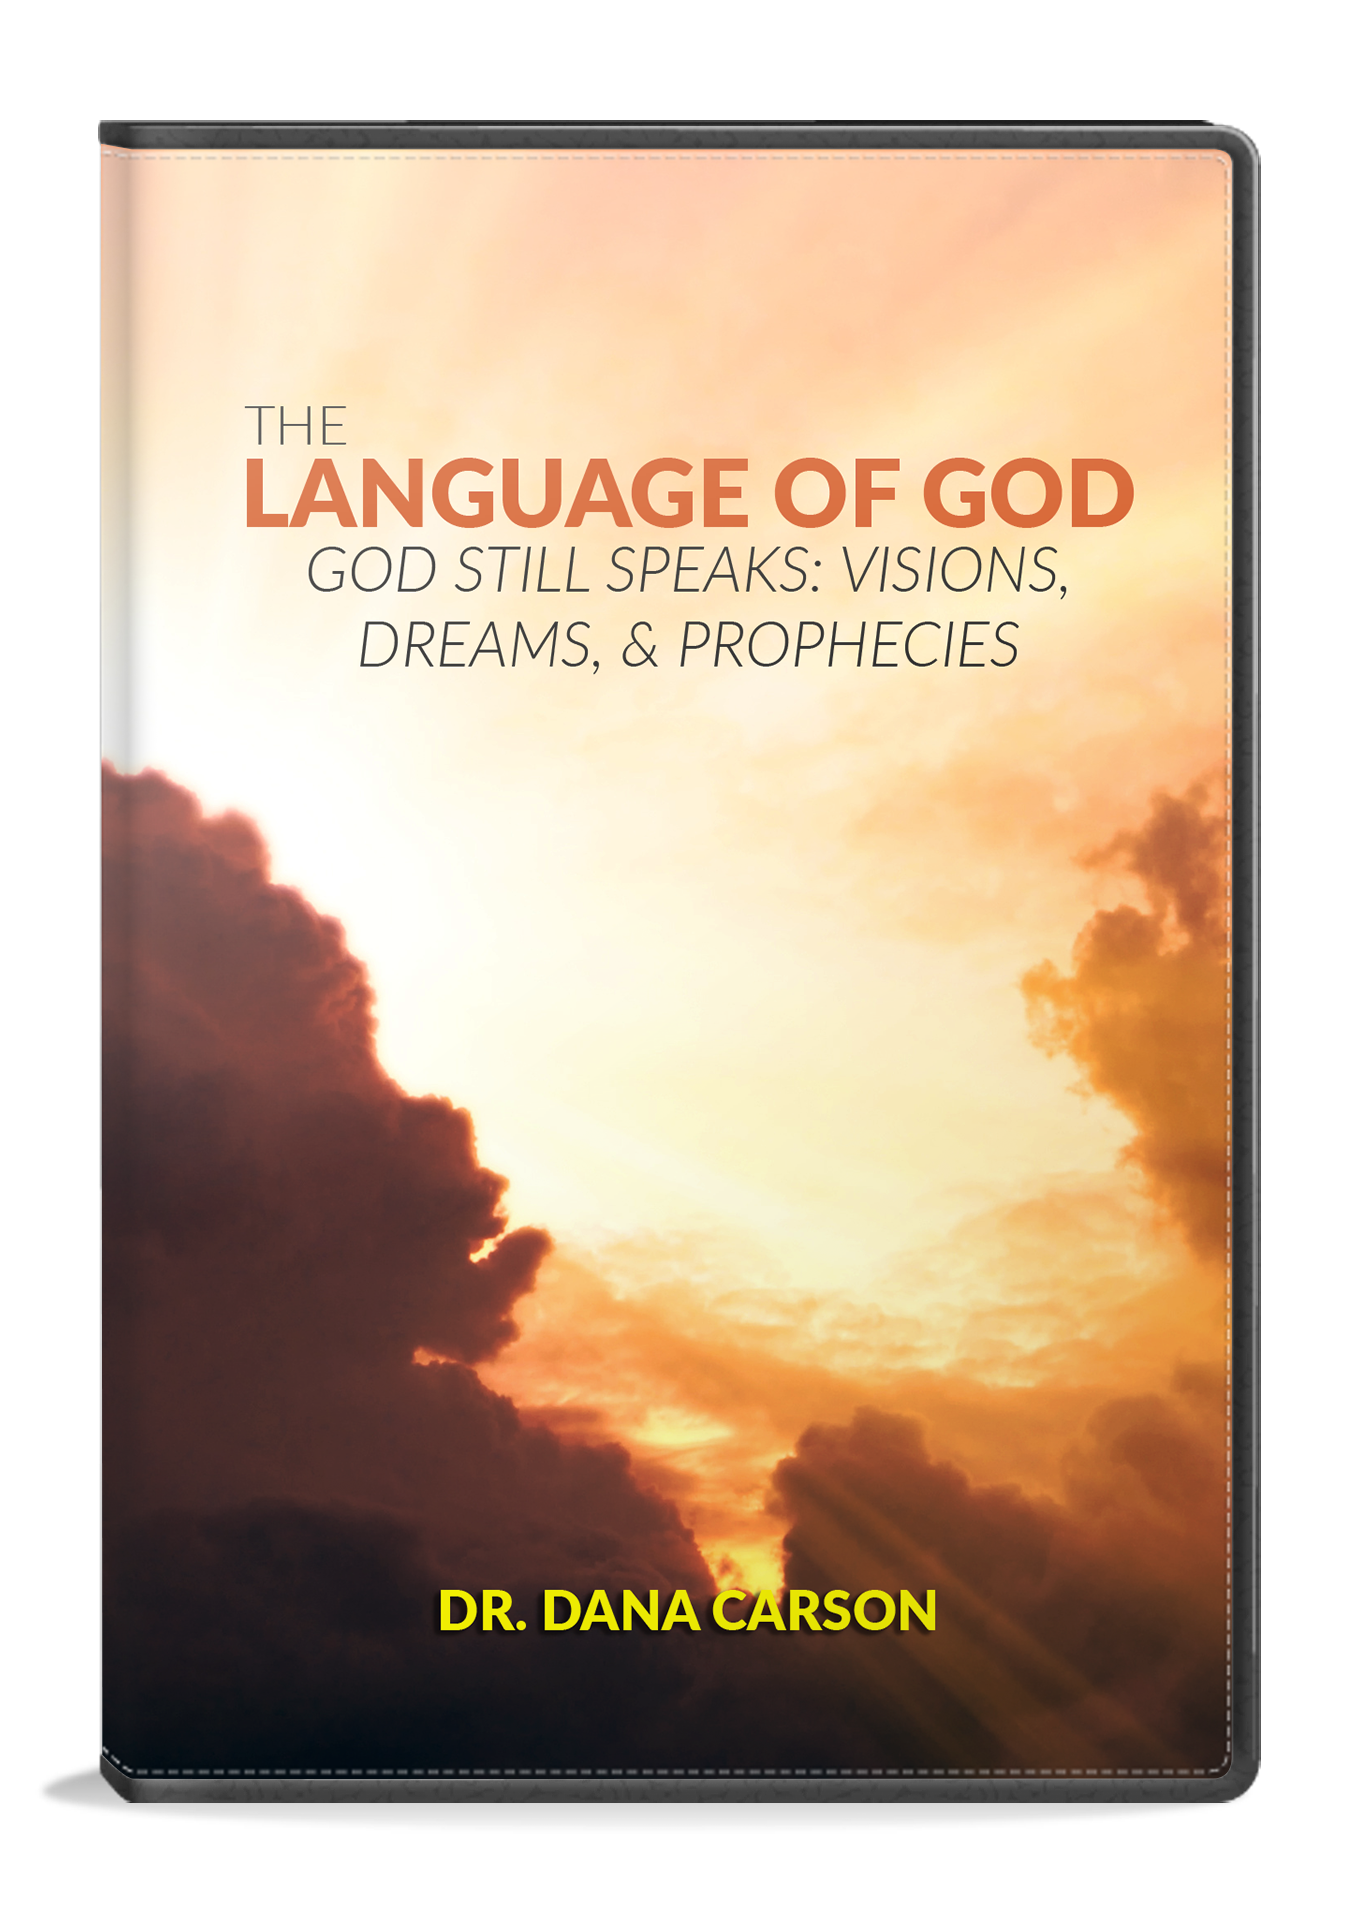 The Language of God Series